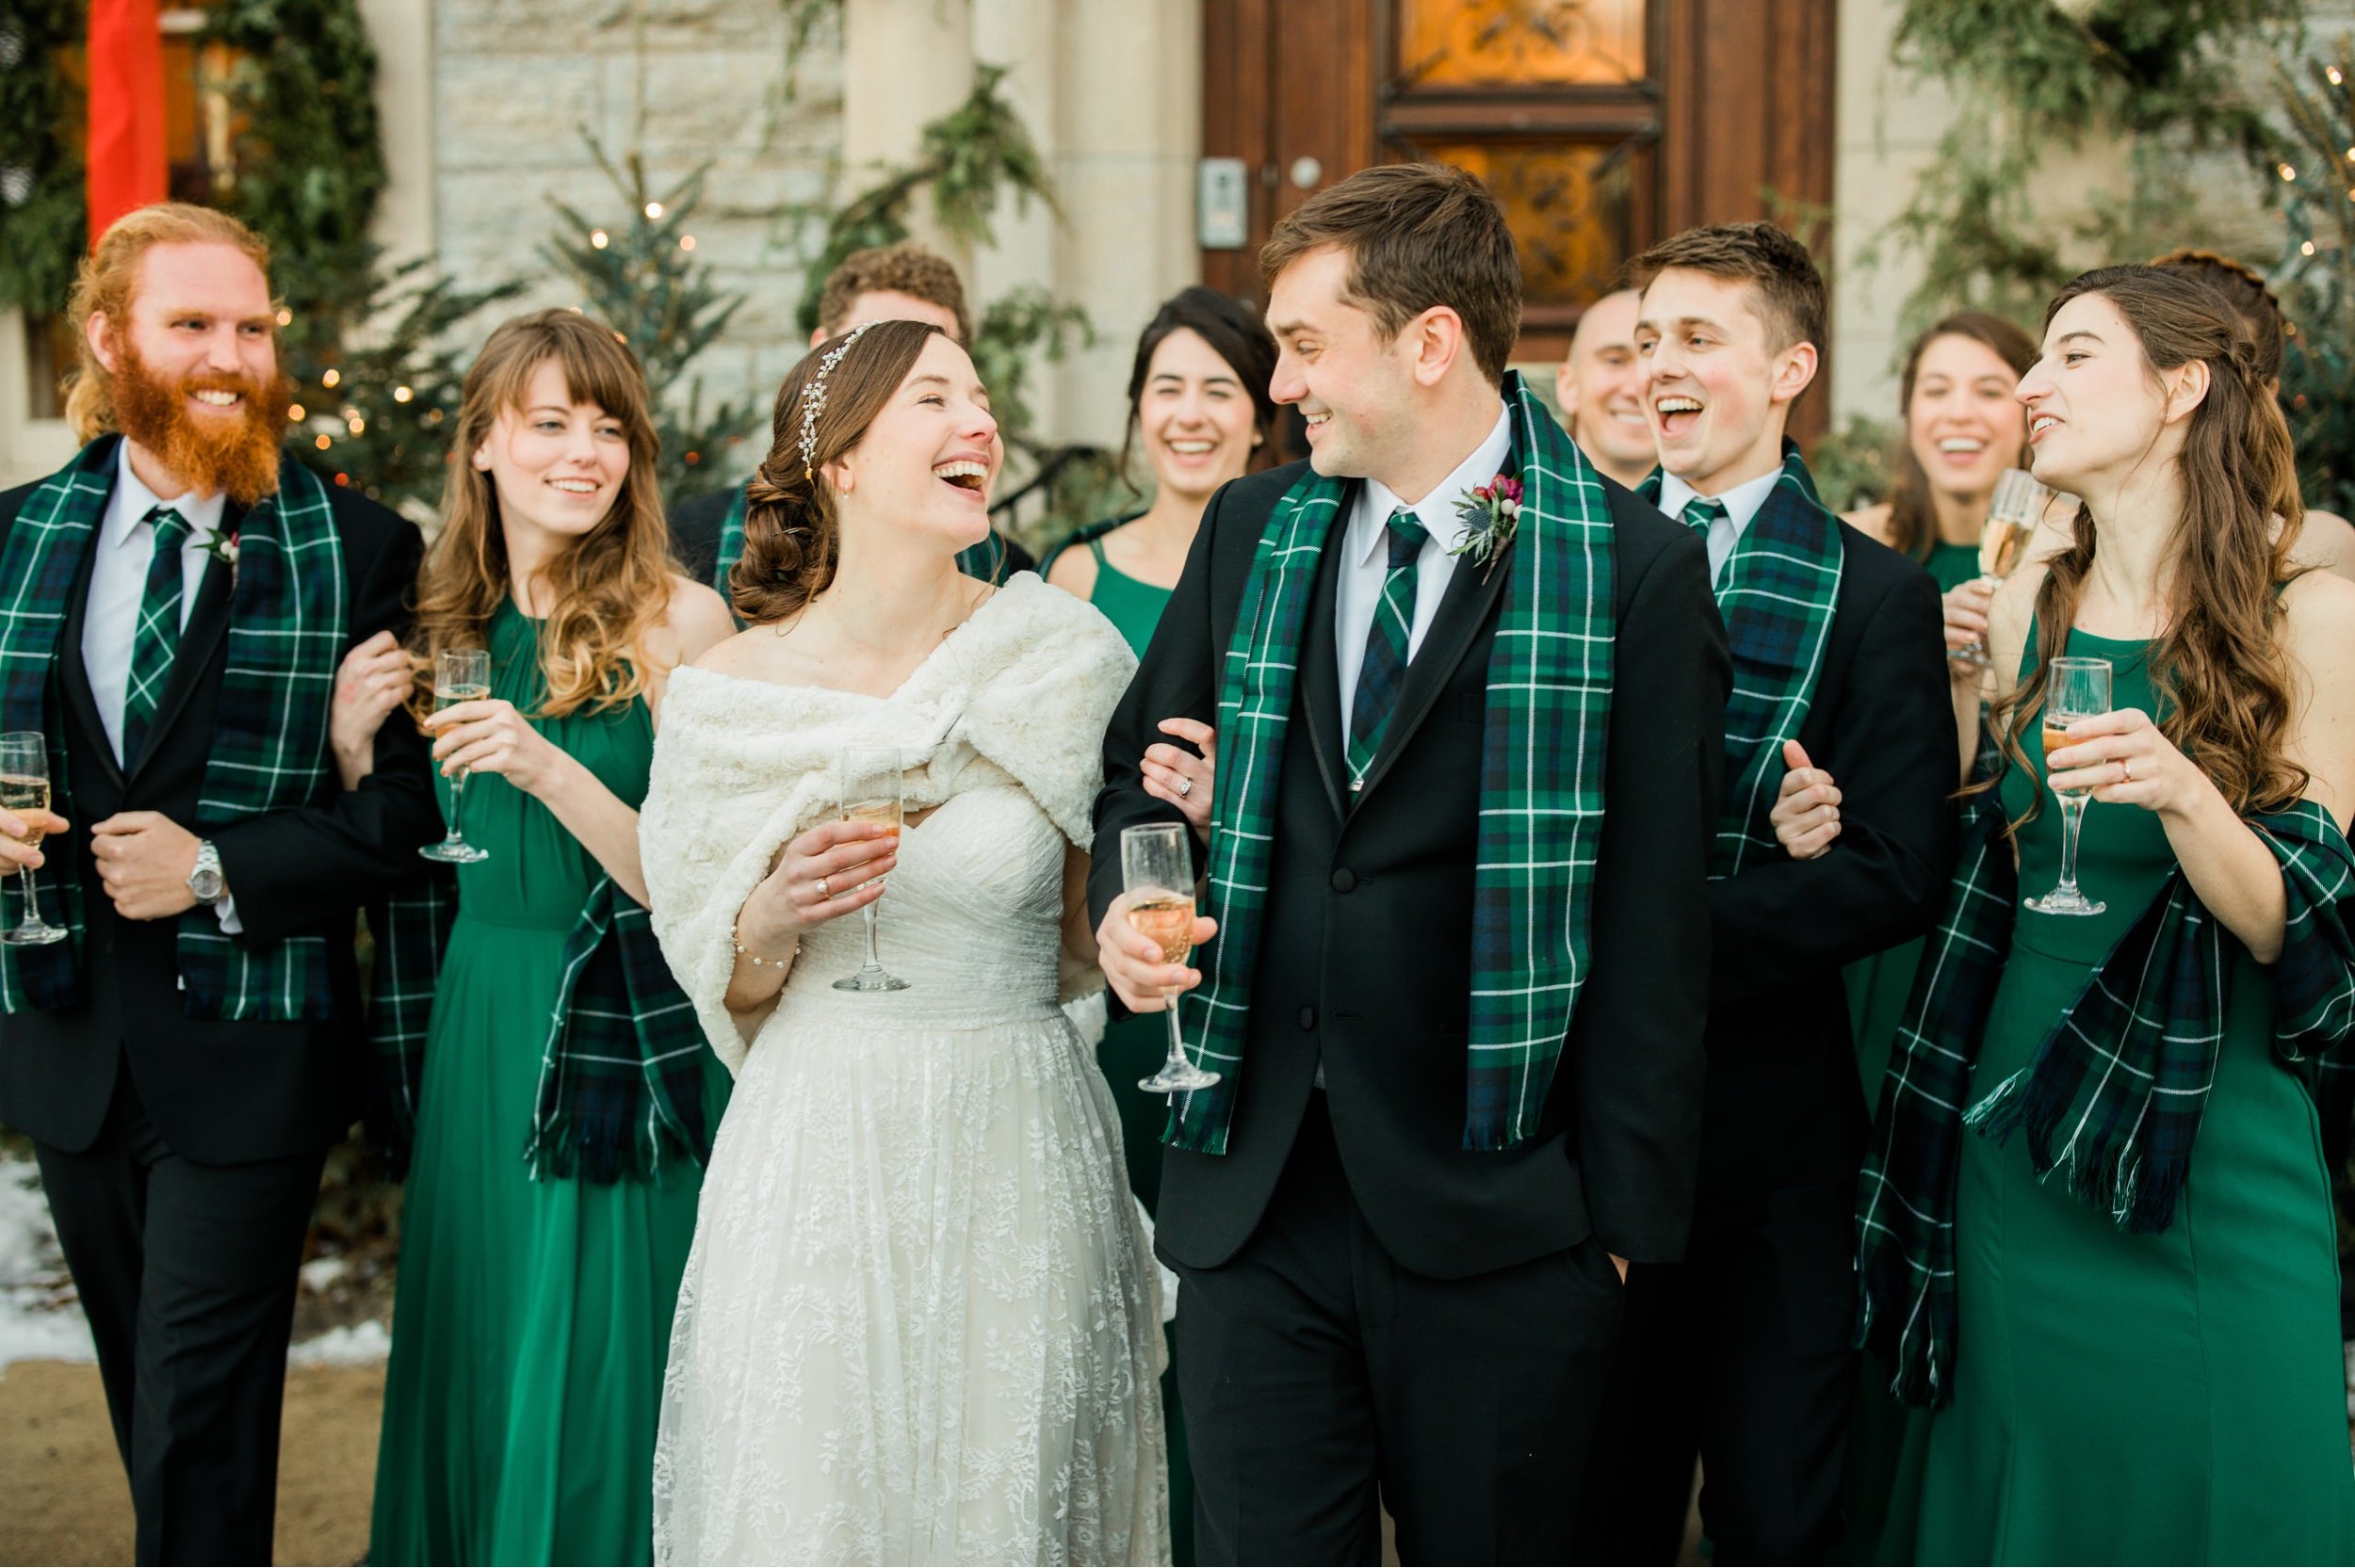 Scottish Winter Wedding at the Saint Paul College Club